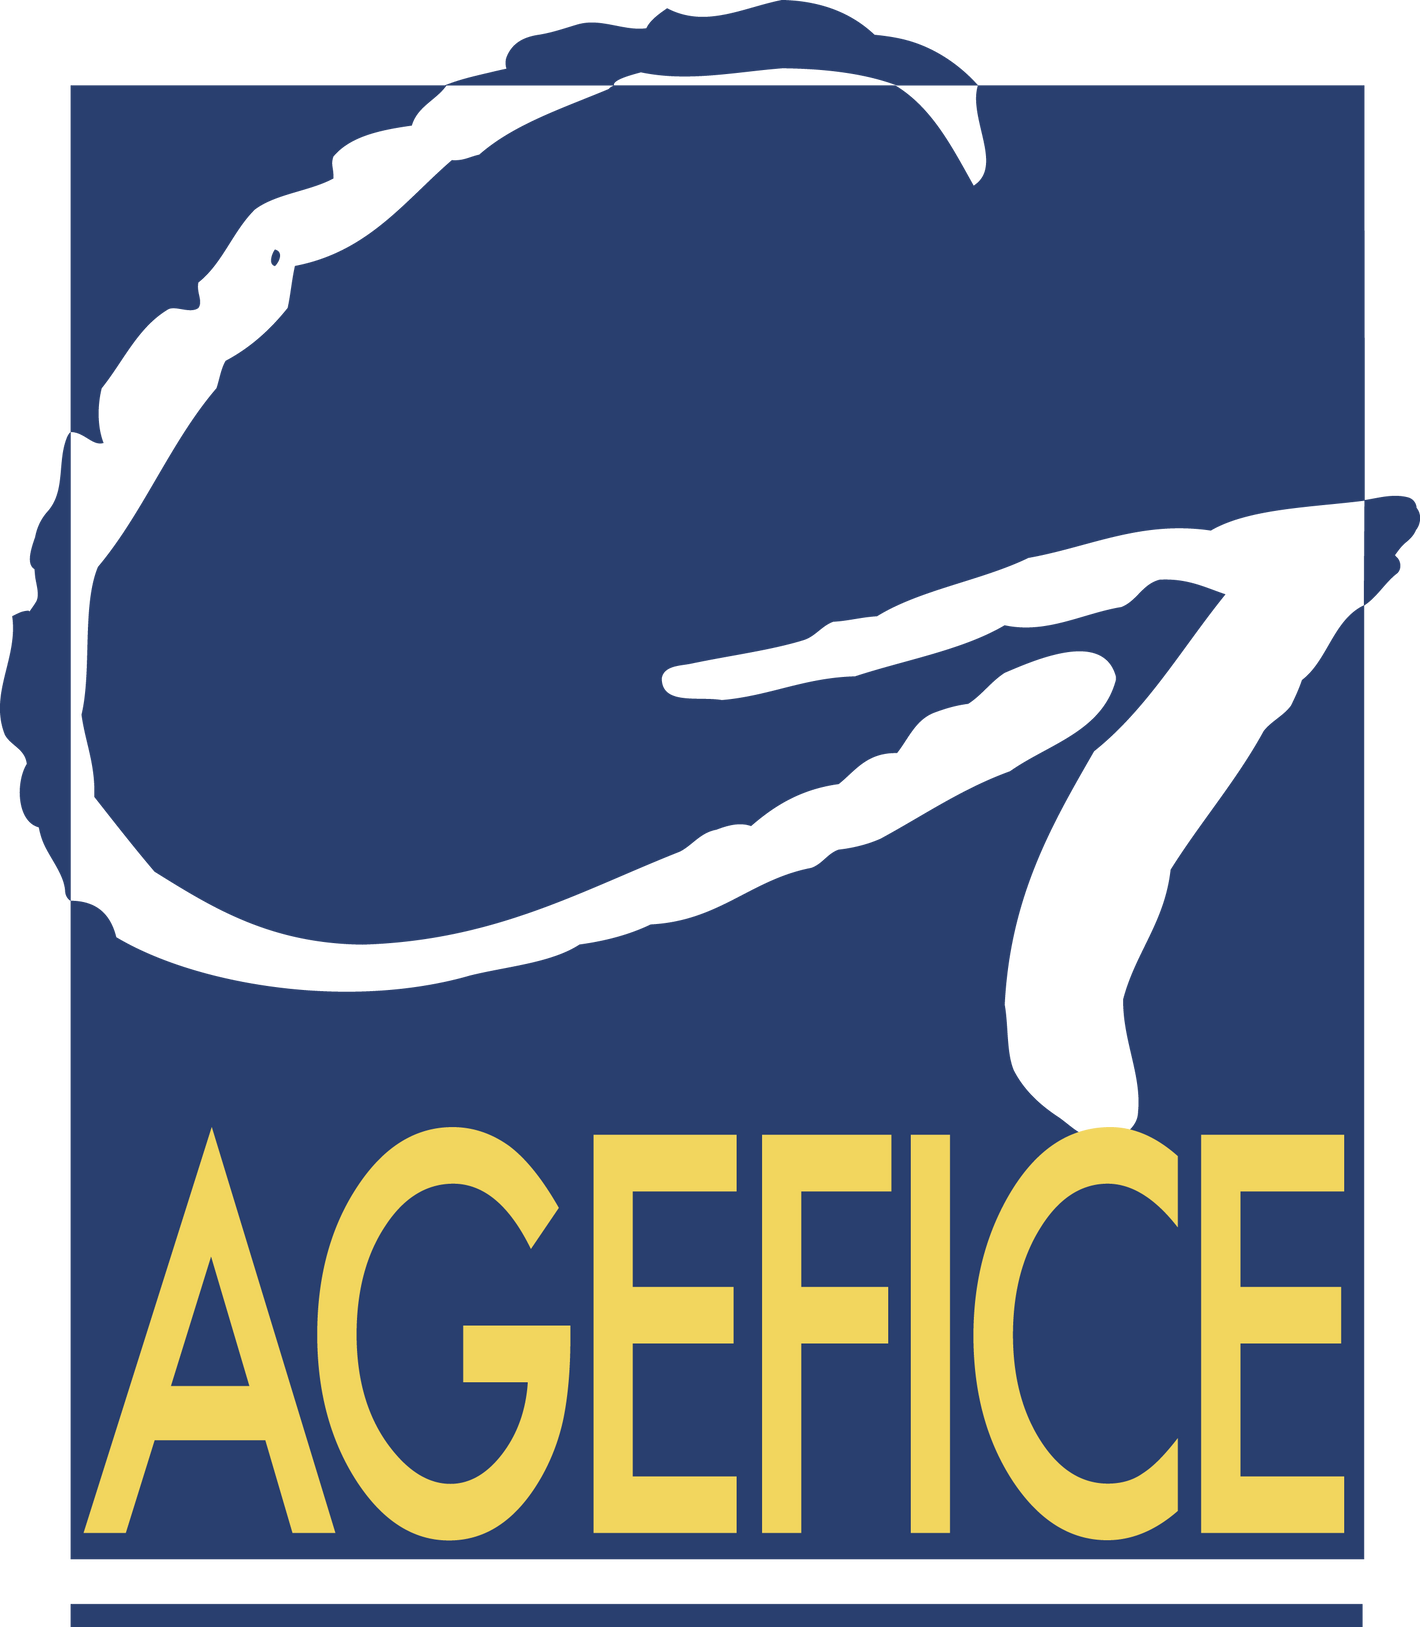 Agefice-logo